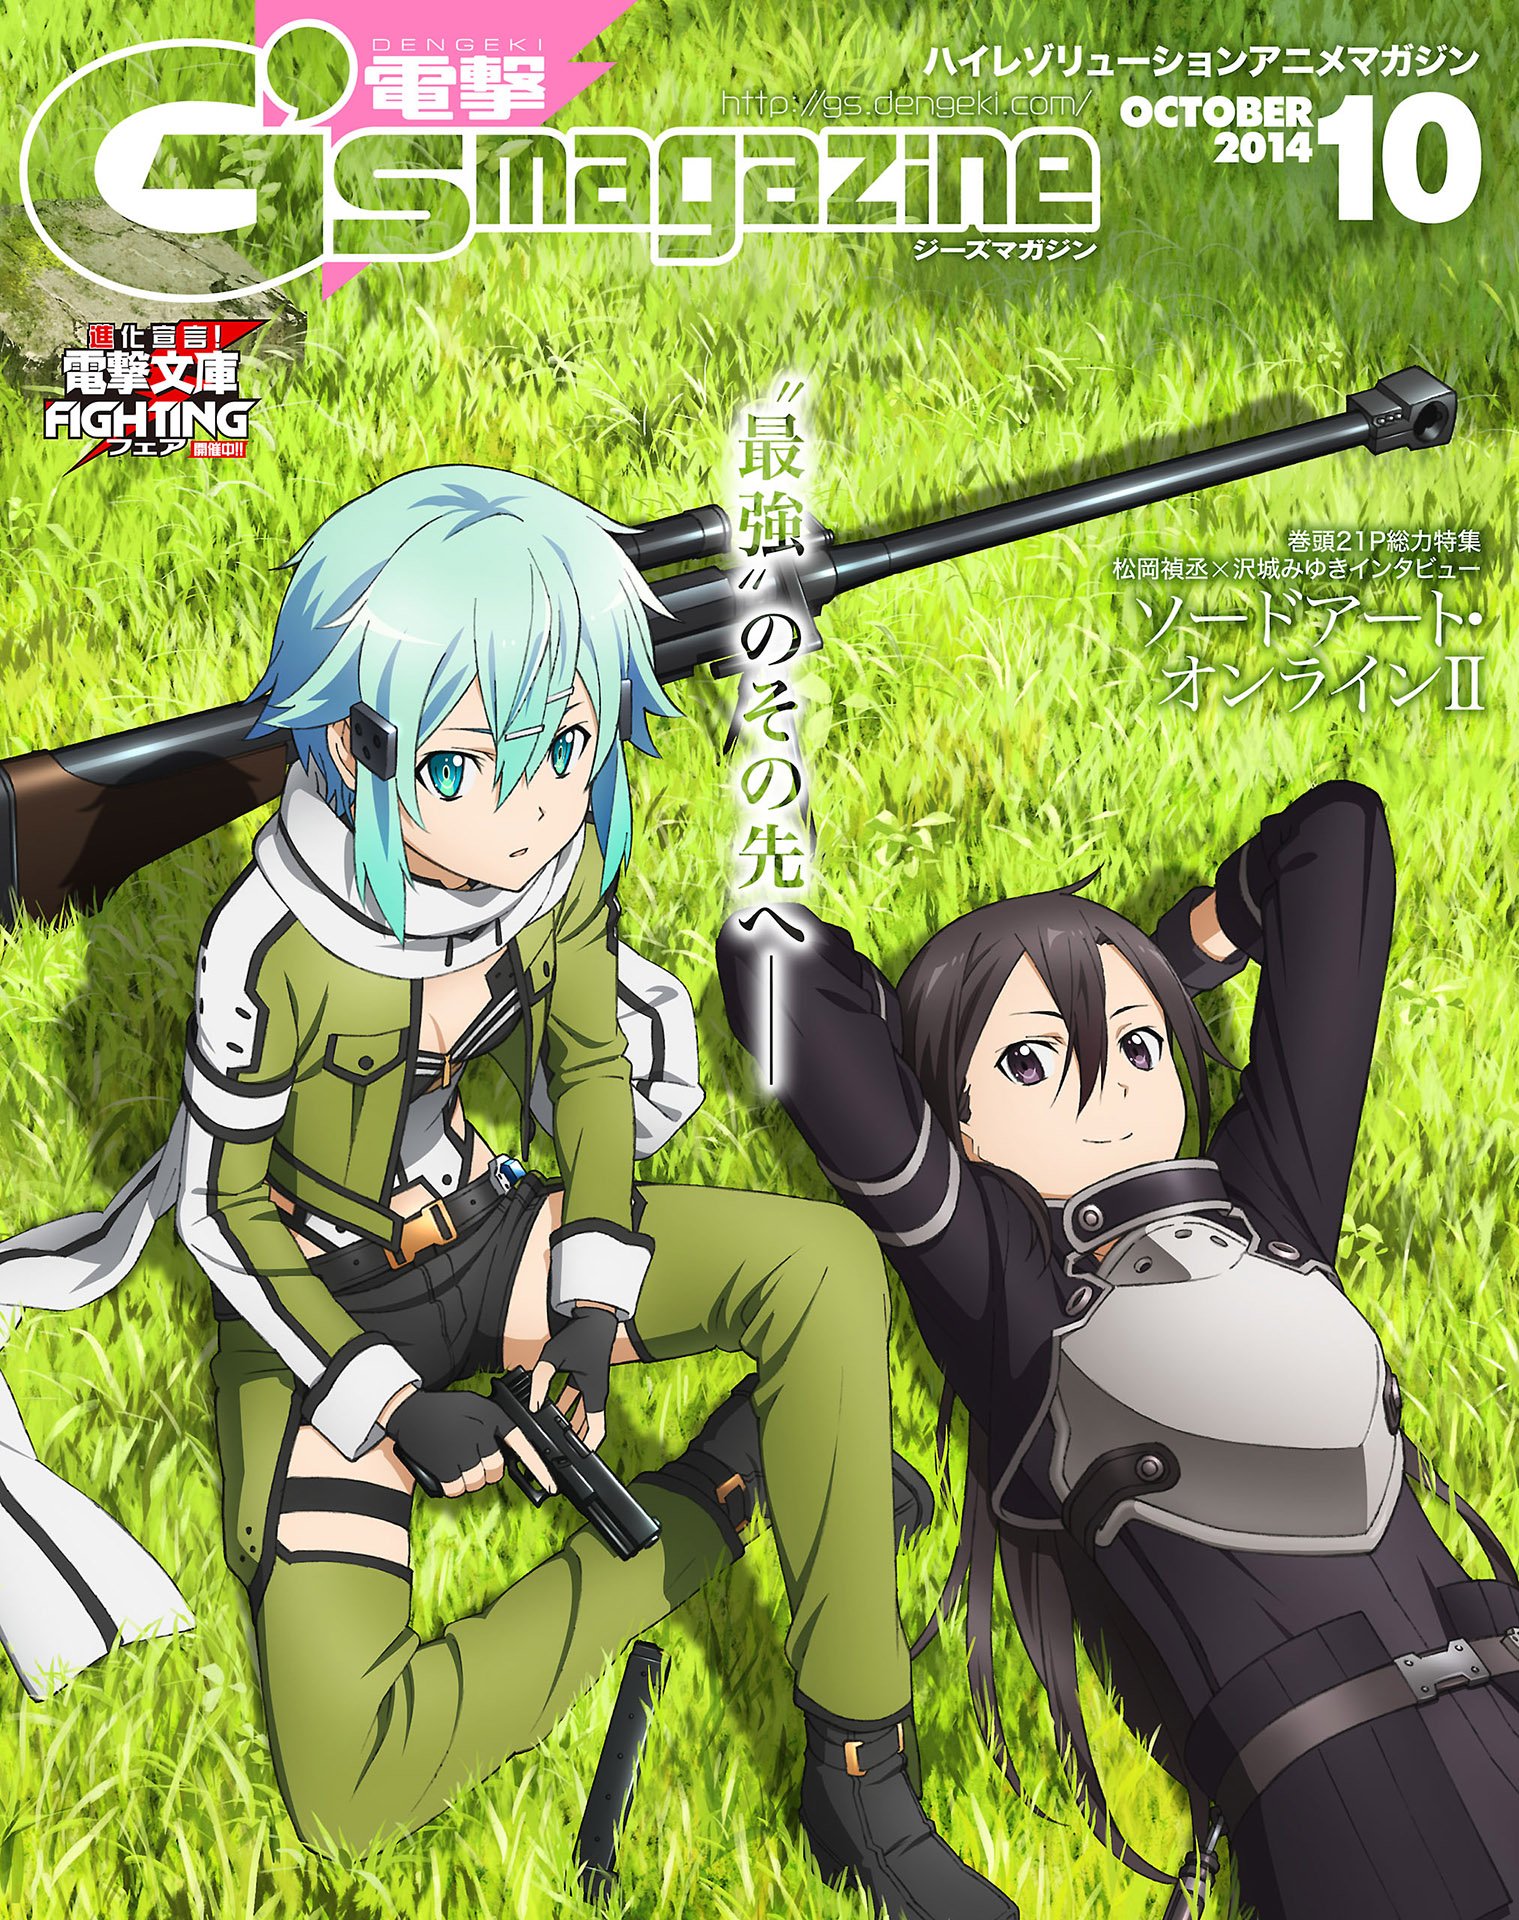 Dengeki G's Magazine Issue 207 (October 2014) (digital edition)